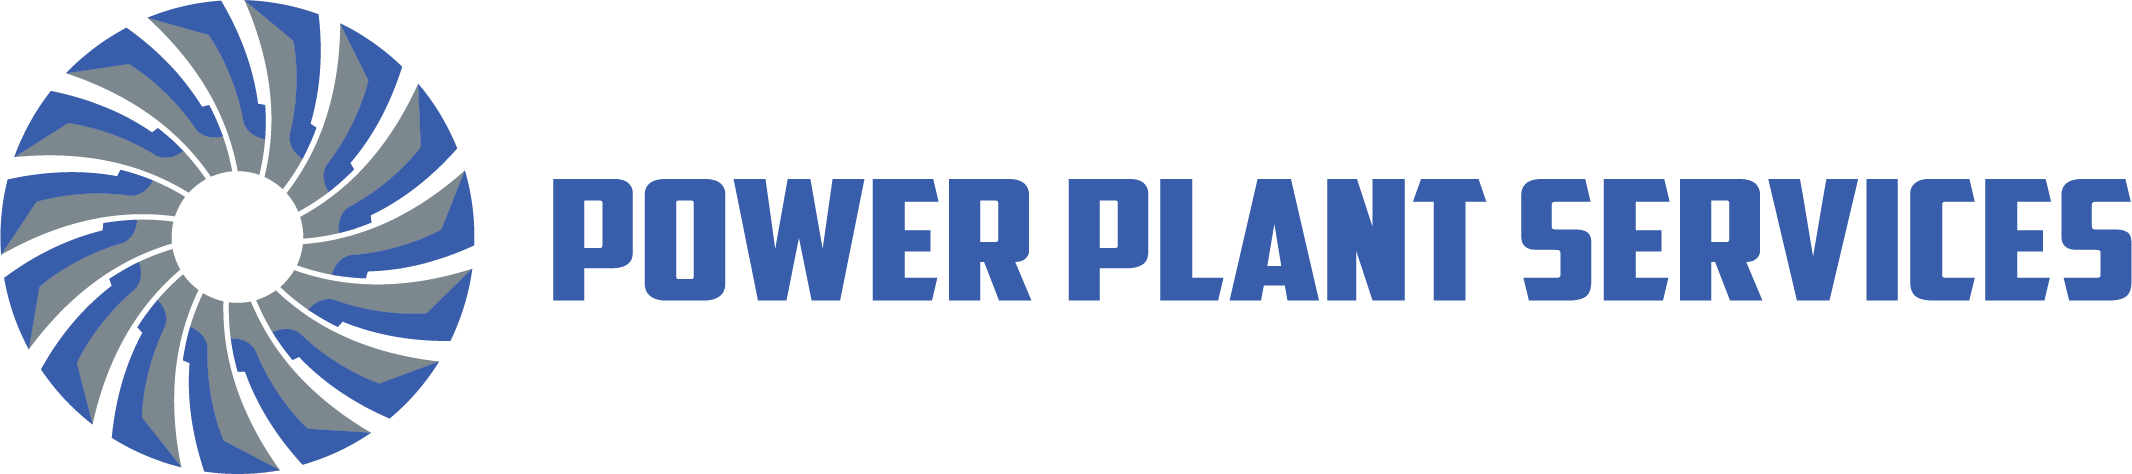 Power Plant Services logo